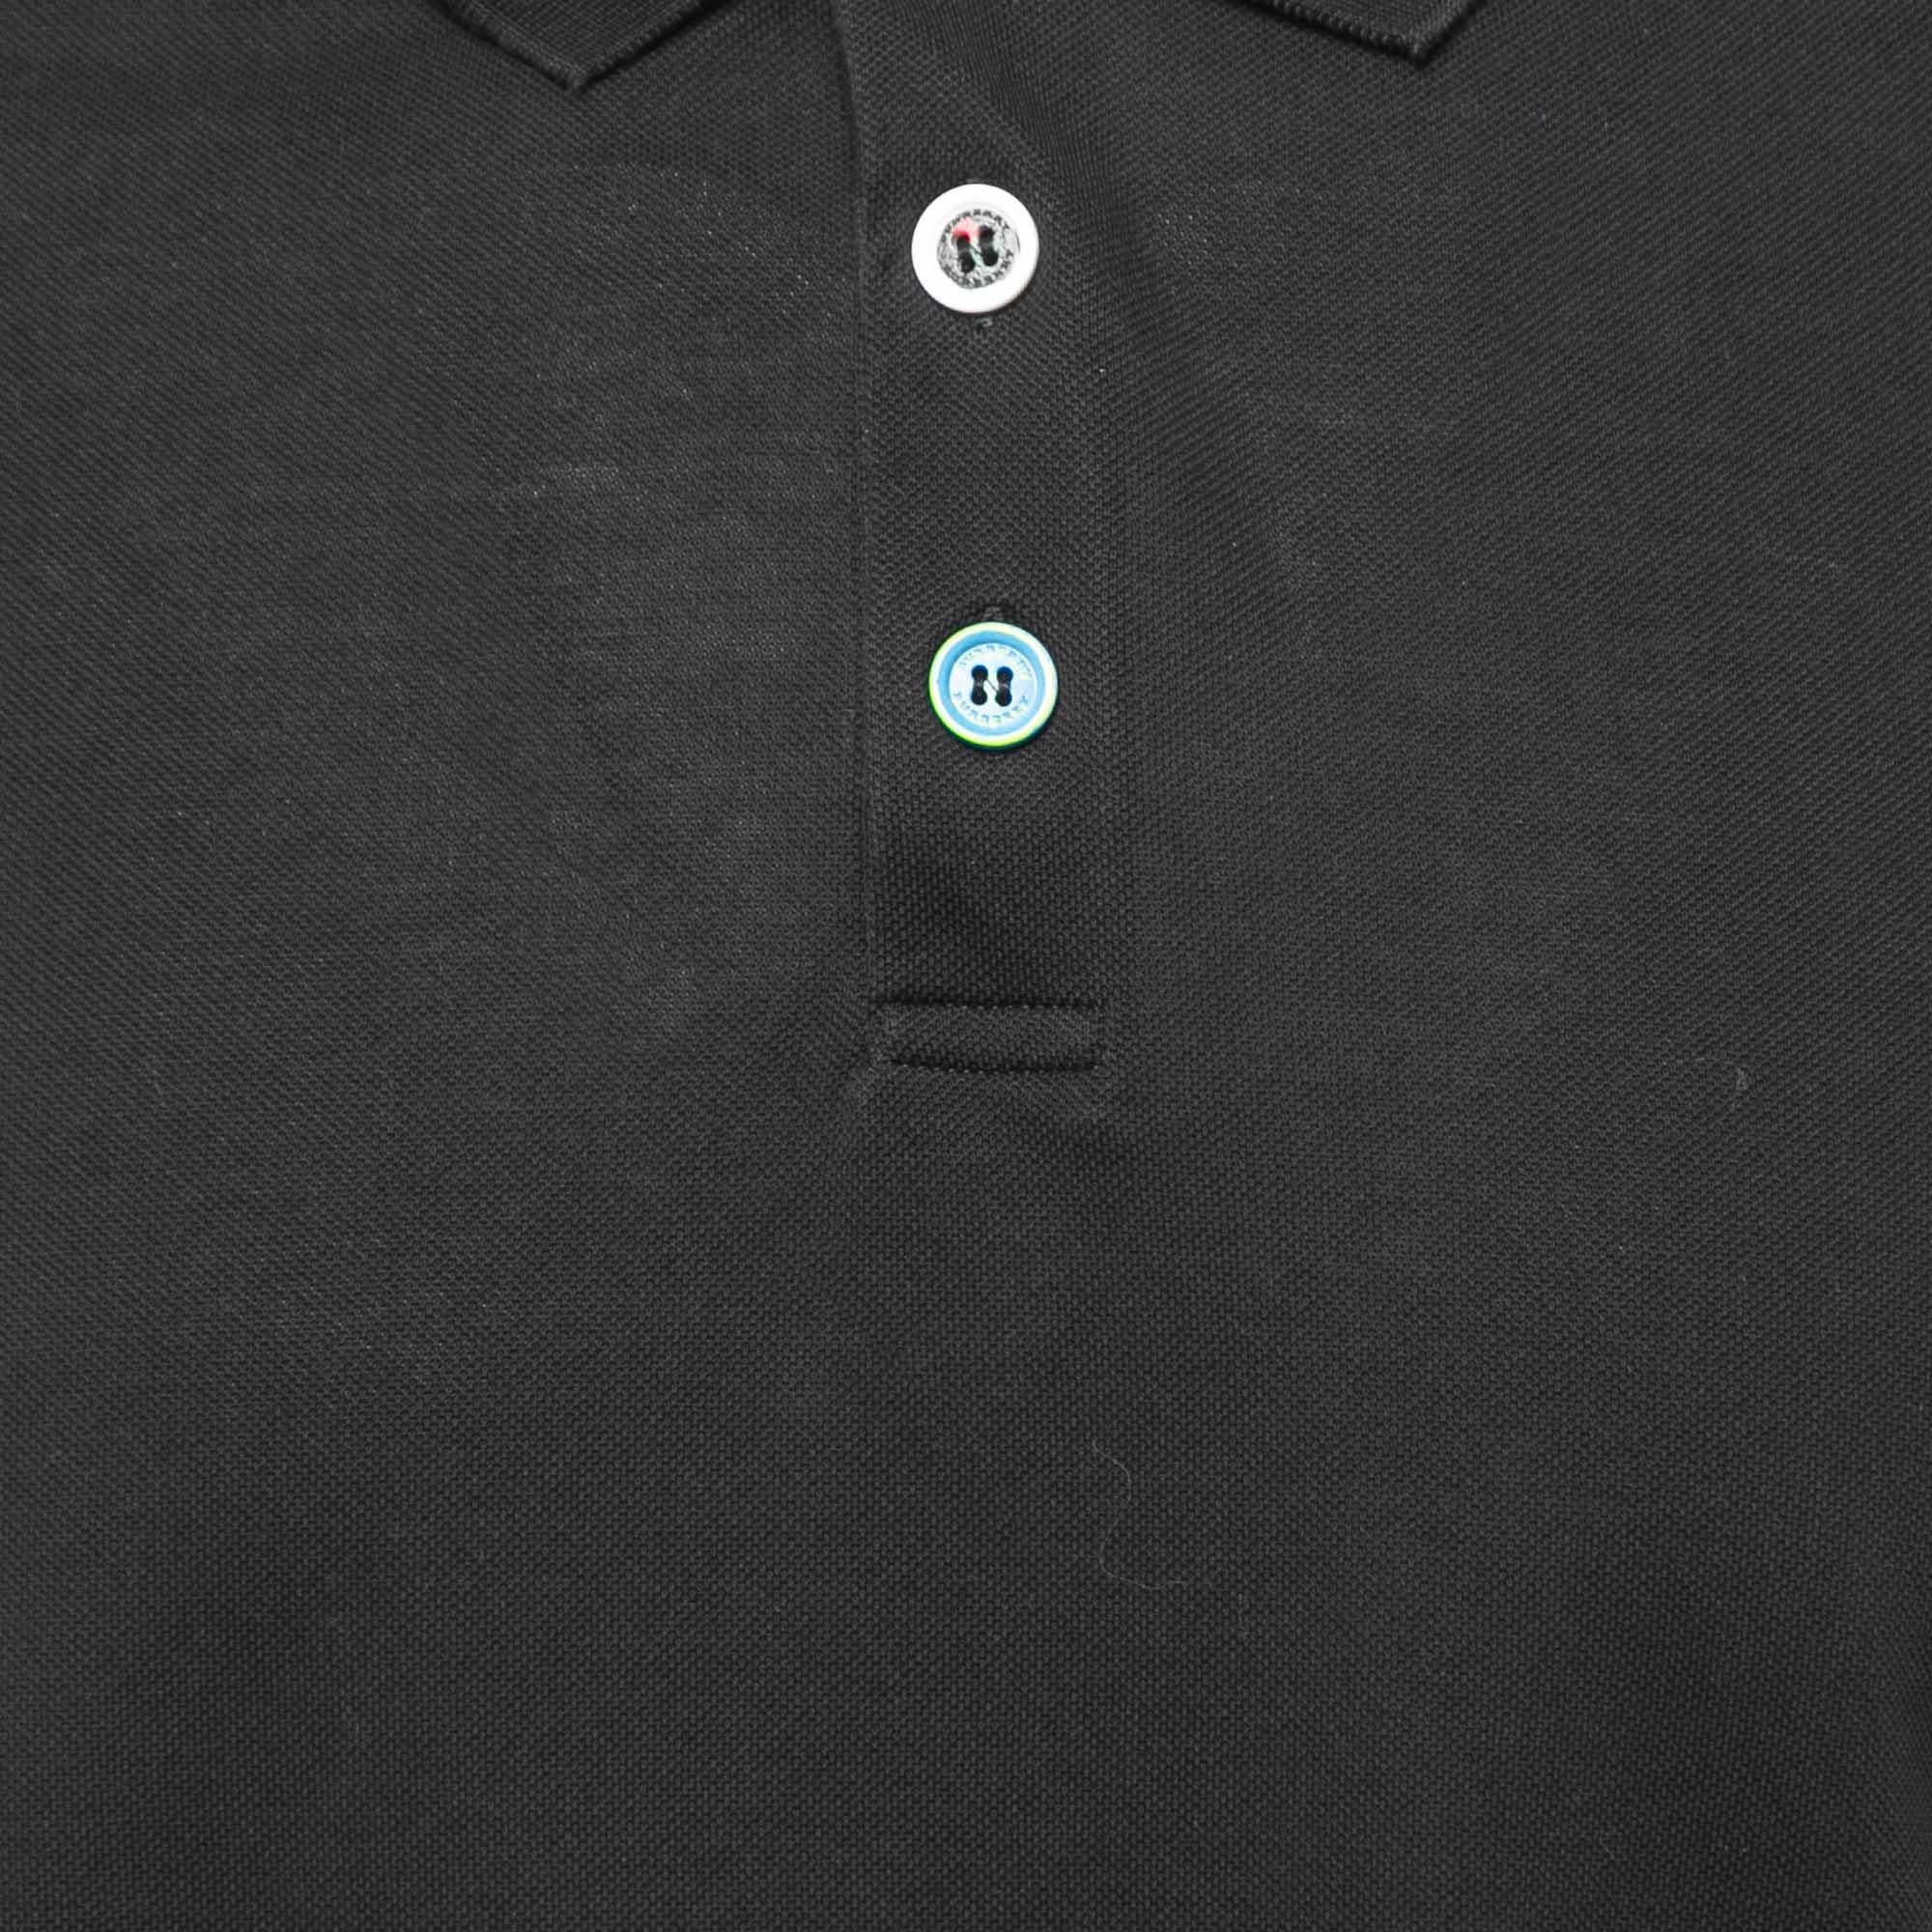 Burberry Black Cotton Pique Polo T-Shirt L In Good Condition For Sale In Dubai, Al Qouz 2